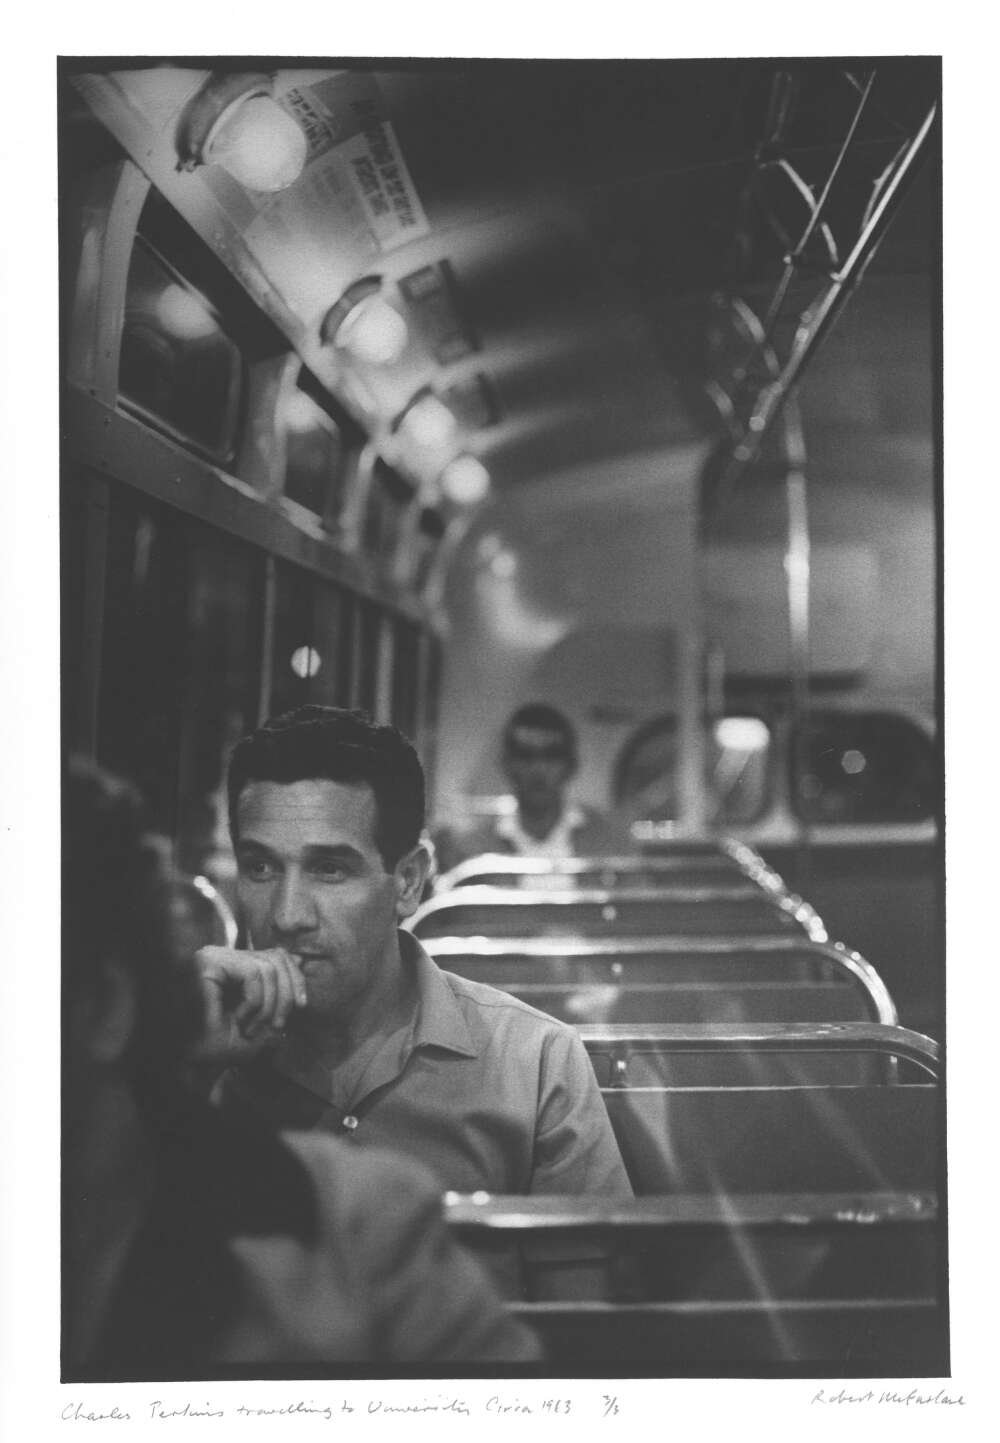 Robert McFarlane, Charles Perkins travelling to University, 1963